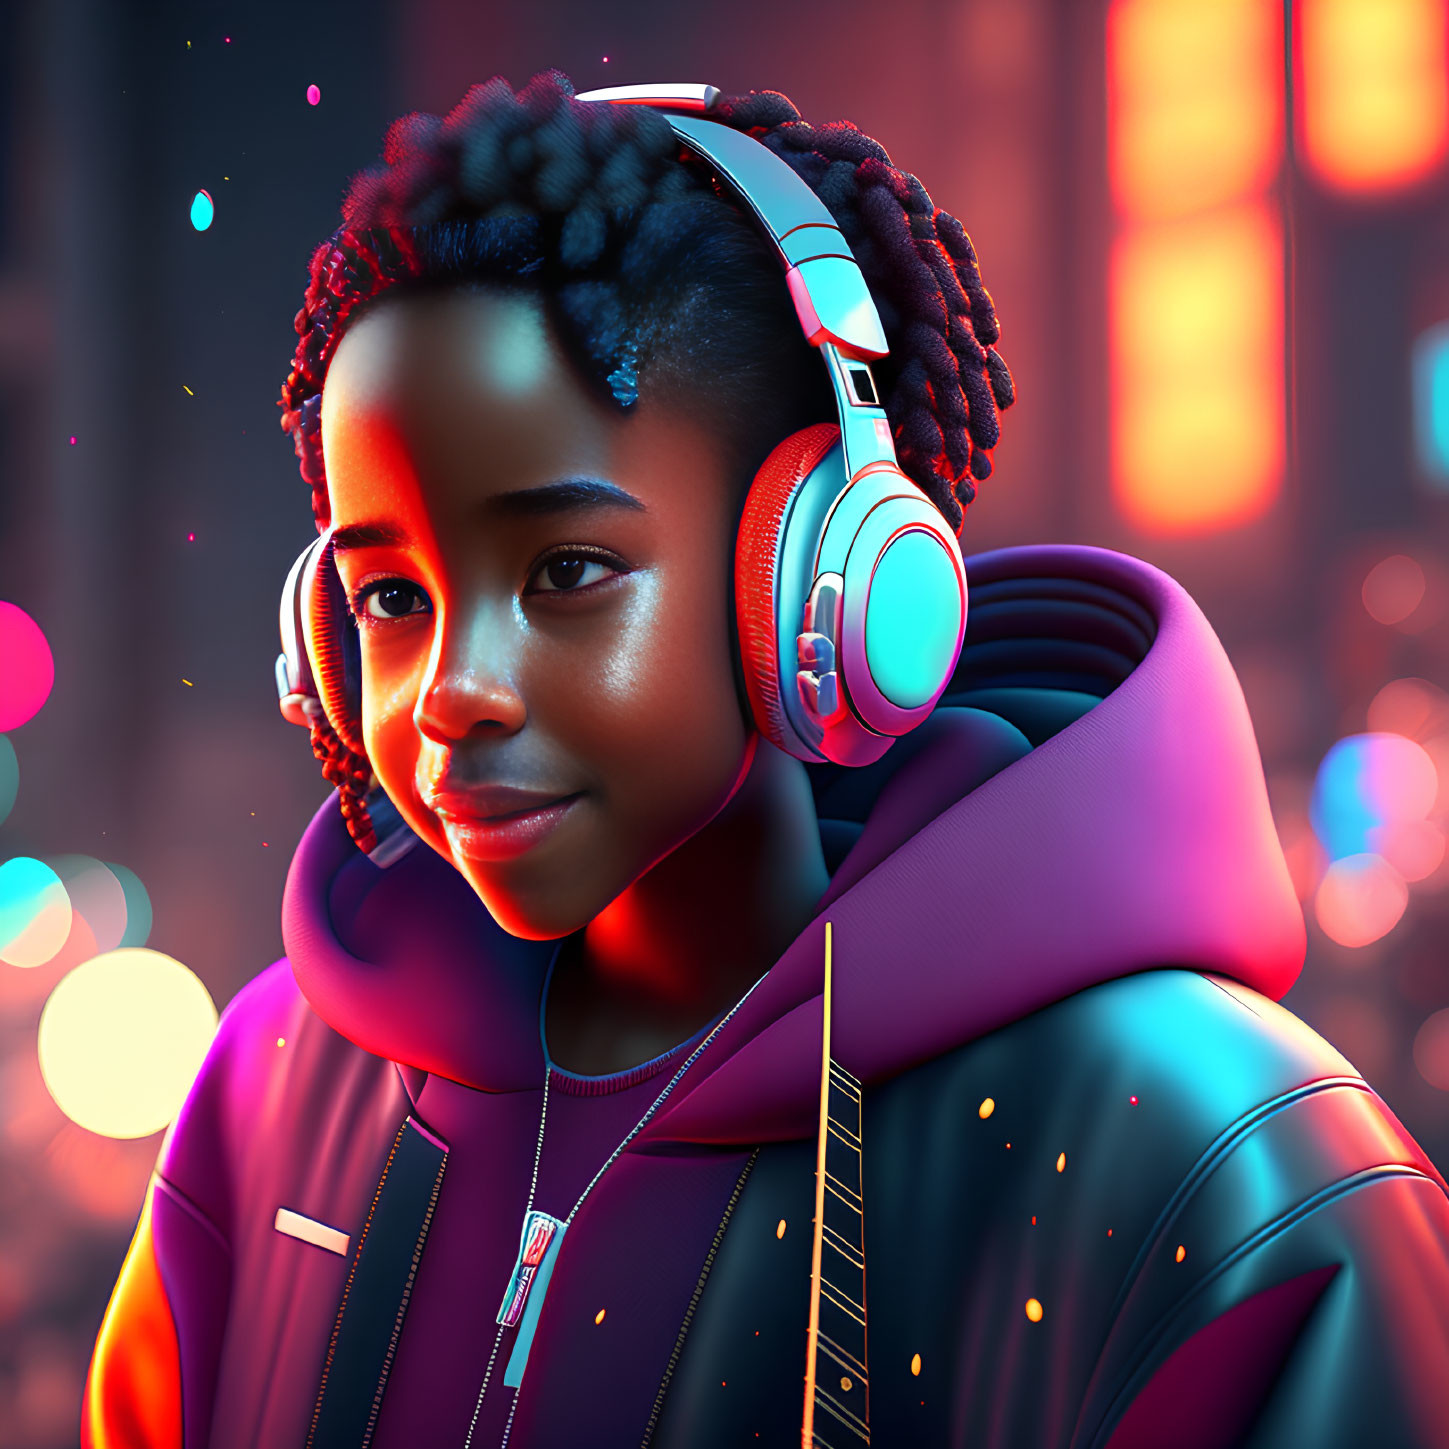 Person in Purple Hoodie with Headphones in Night Street Scene